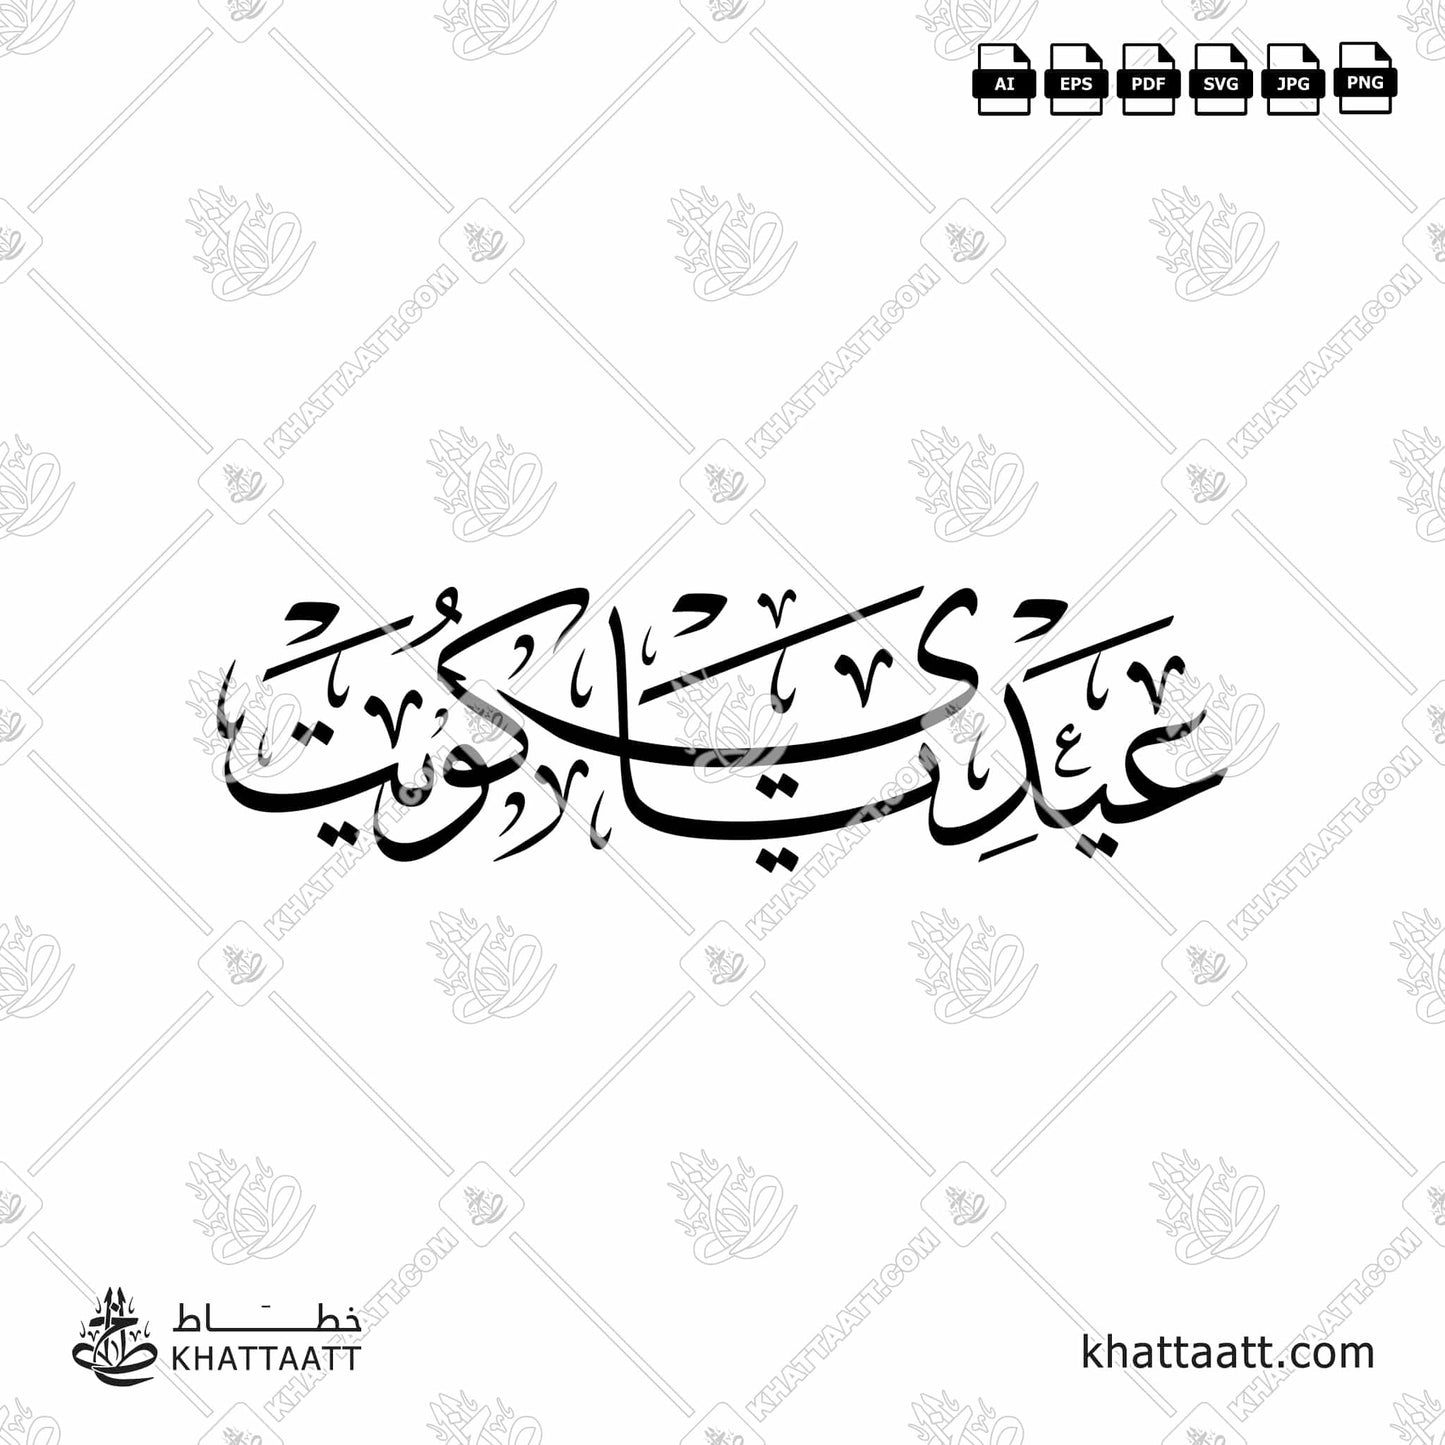 Download Arabic calligraphy تحميل مخطوطة خط عربي of عيدي يا كويت (T011) Thuluth - خط الثلث in vector فيكتور and png